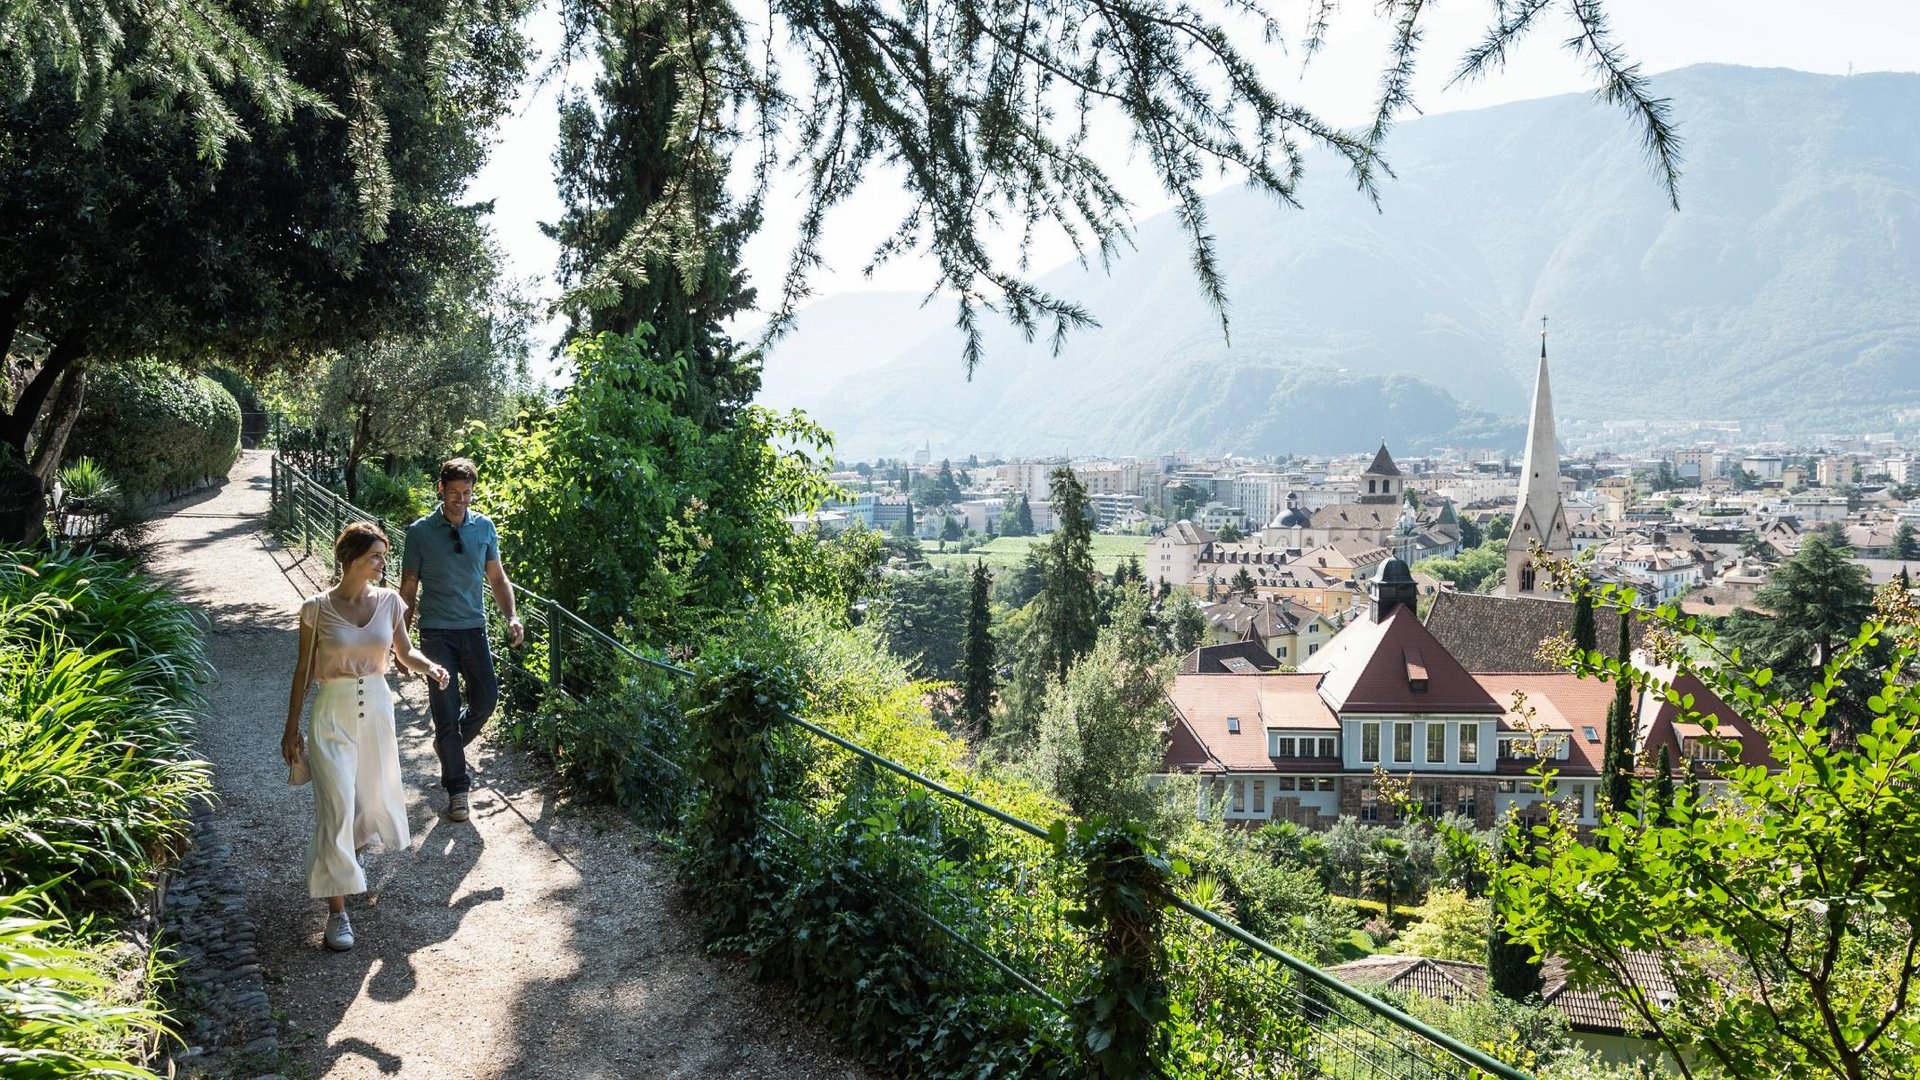 Holiday in Bolzano: Adventures en masse